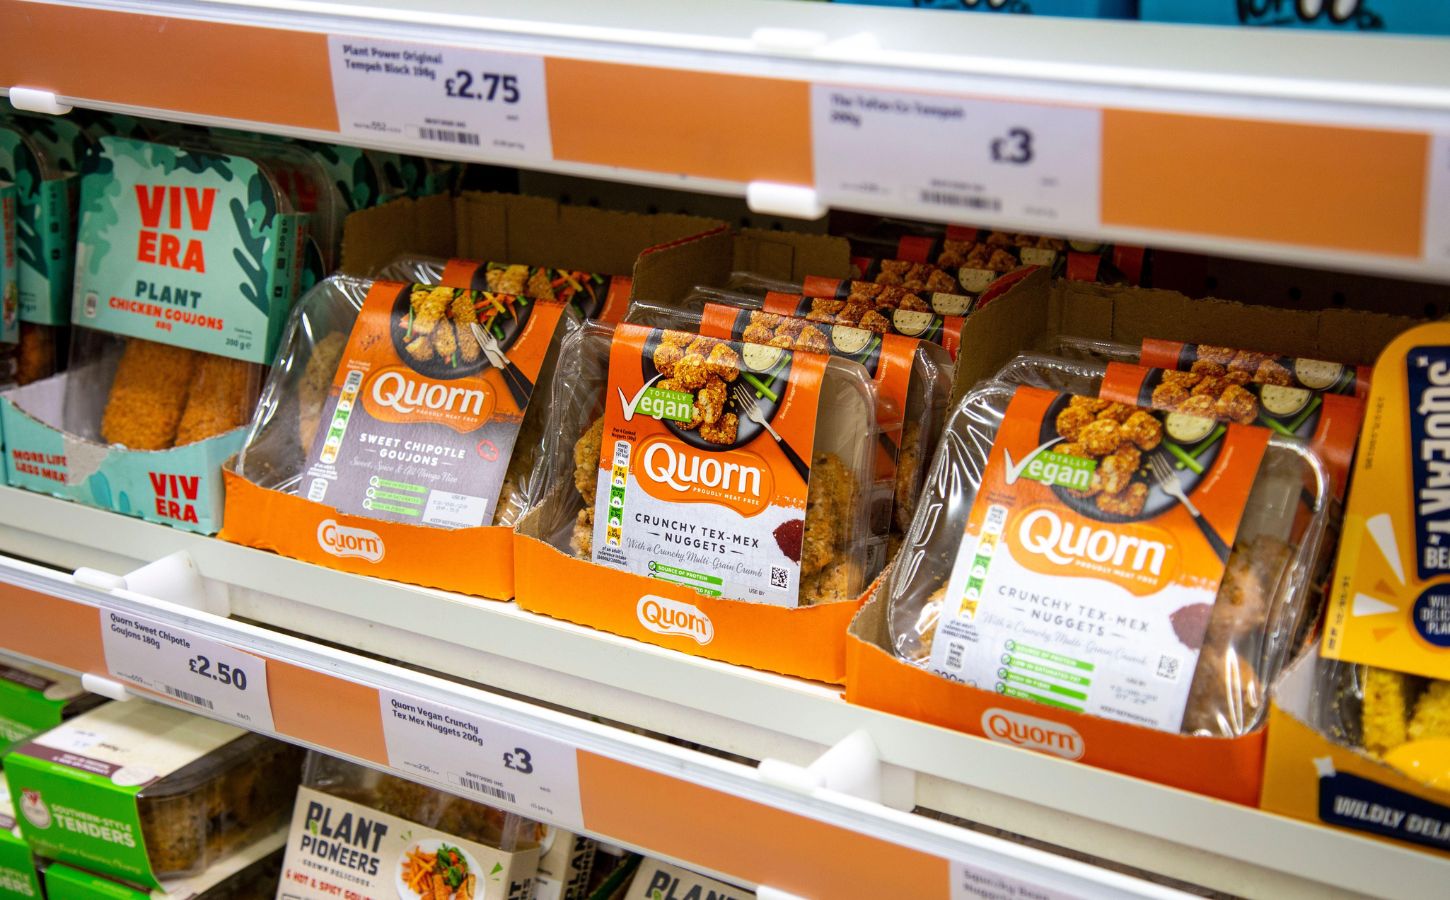 Supermarket shelves featuring vegan and vegetarian meat alternatives like Quorn